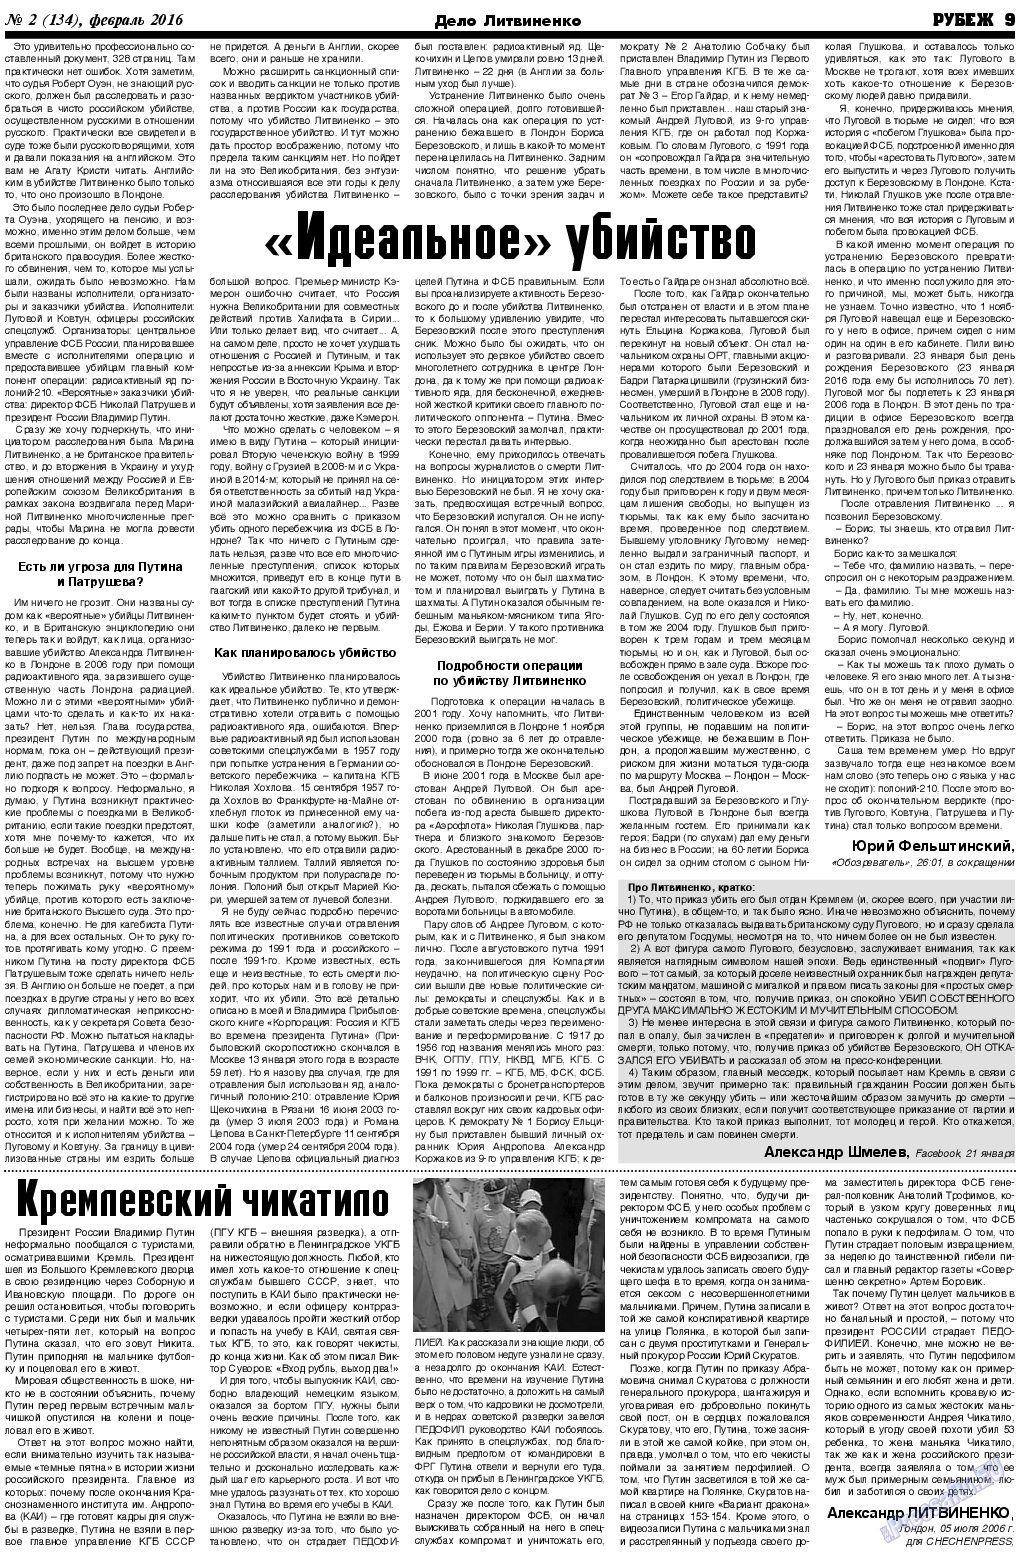 Рубеж, газета. 2016 №2 стр.9